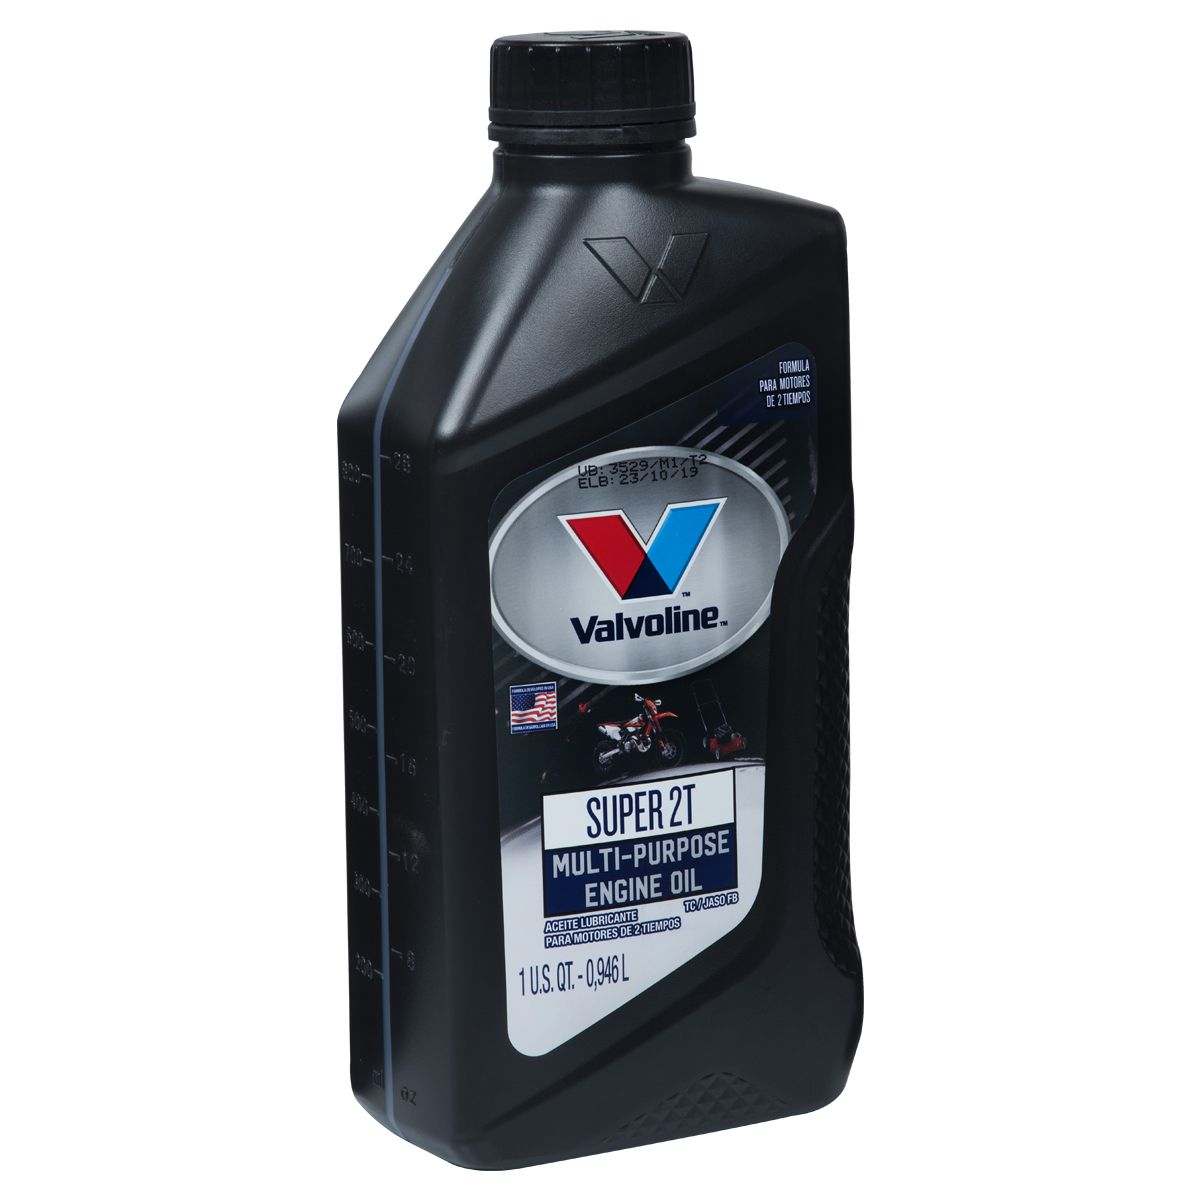 Aceite Valvoline para Motores de Dos Tiempos - FerrisariatoFerrisariato